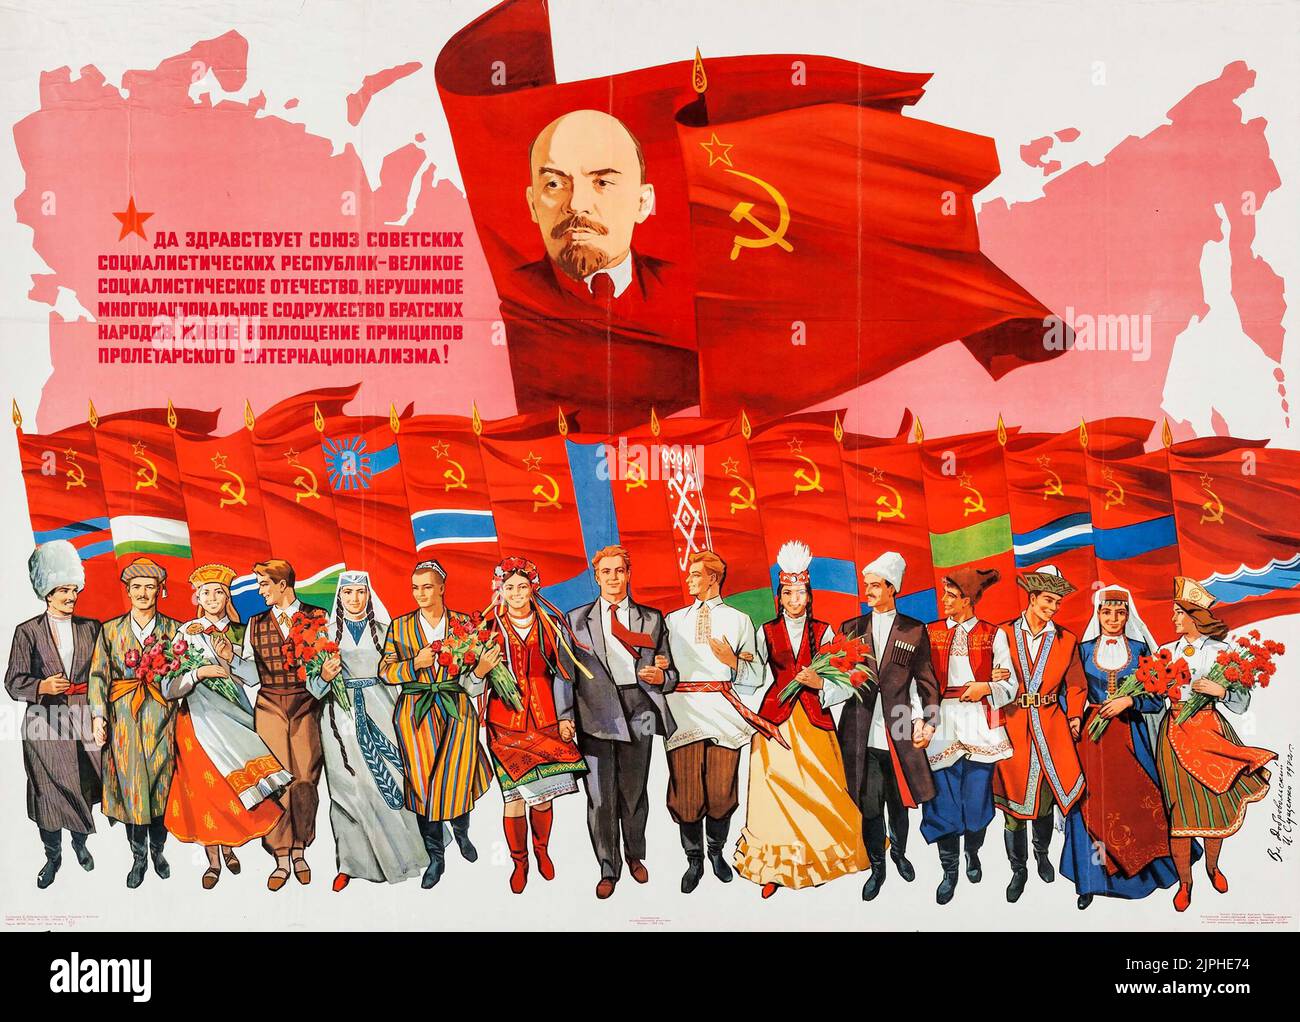 Soviet Propaganda (1972). Russian Poster feat Russian flag (Hammer and sickle) and Soviet leader Vladmir Lenin. Stock Photo